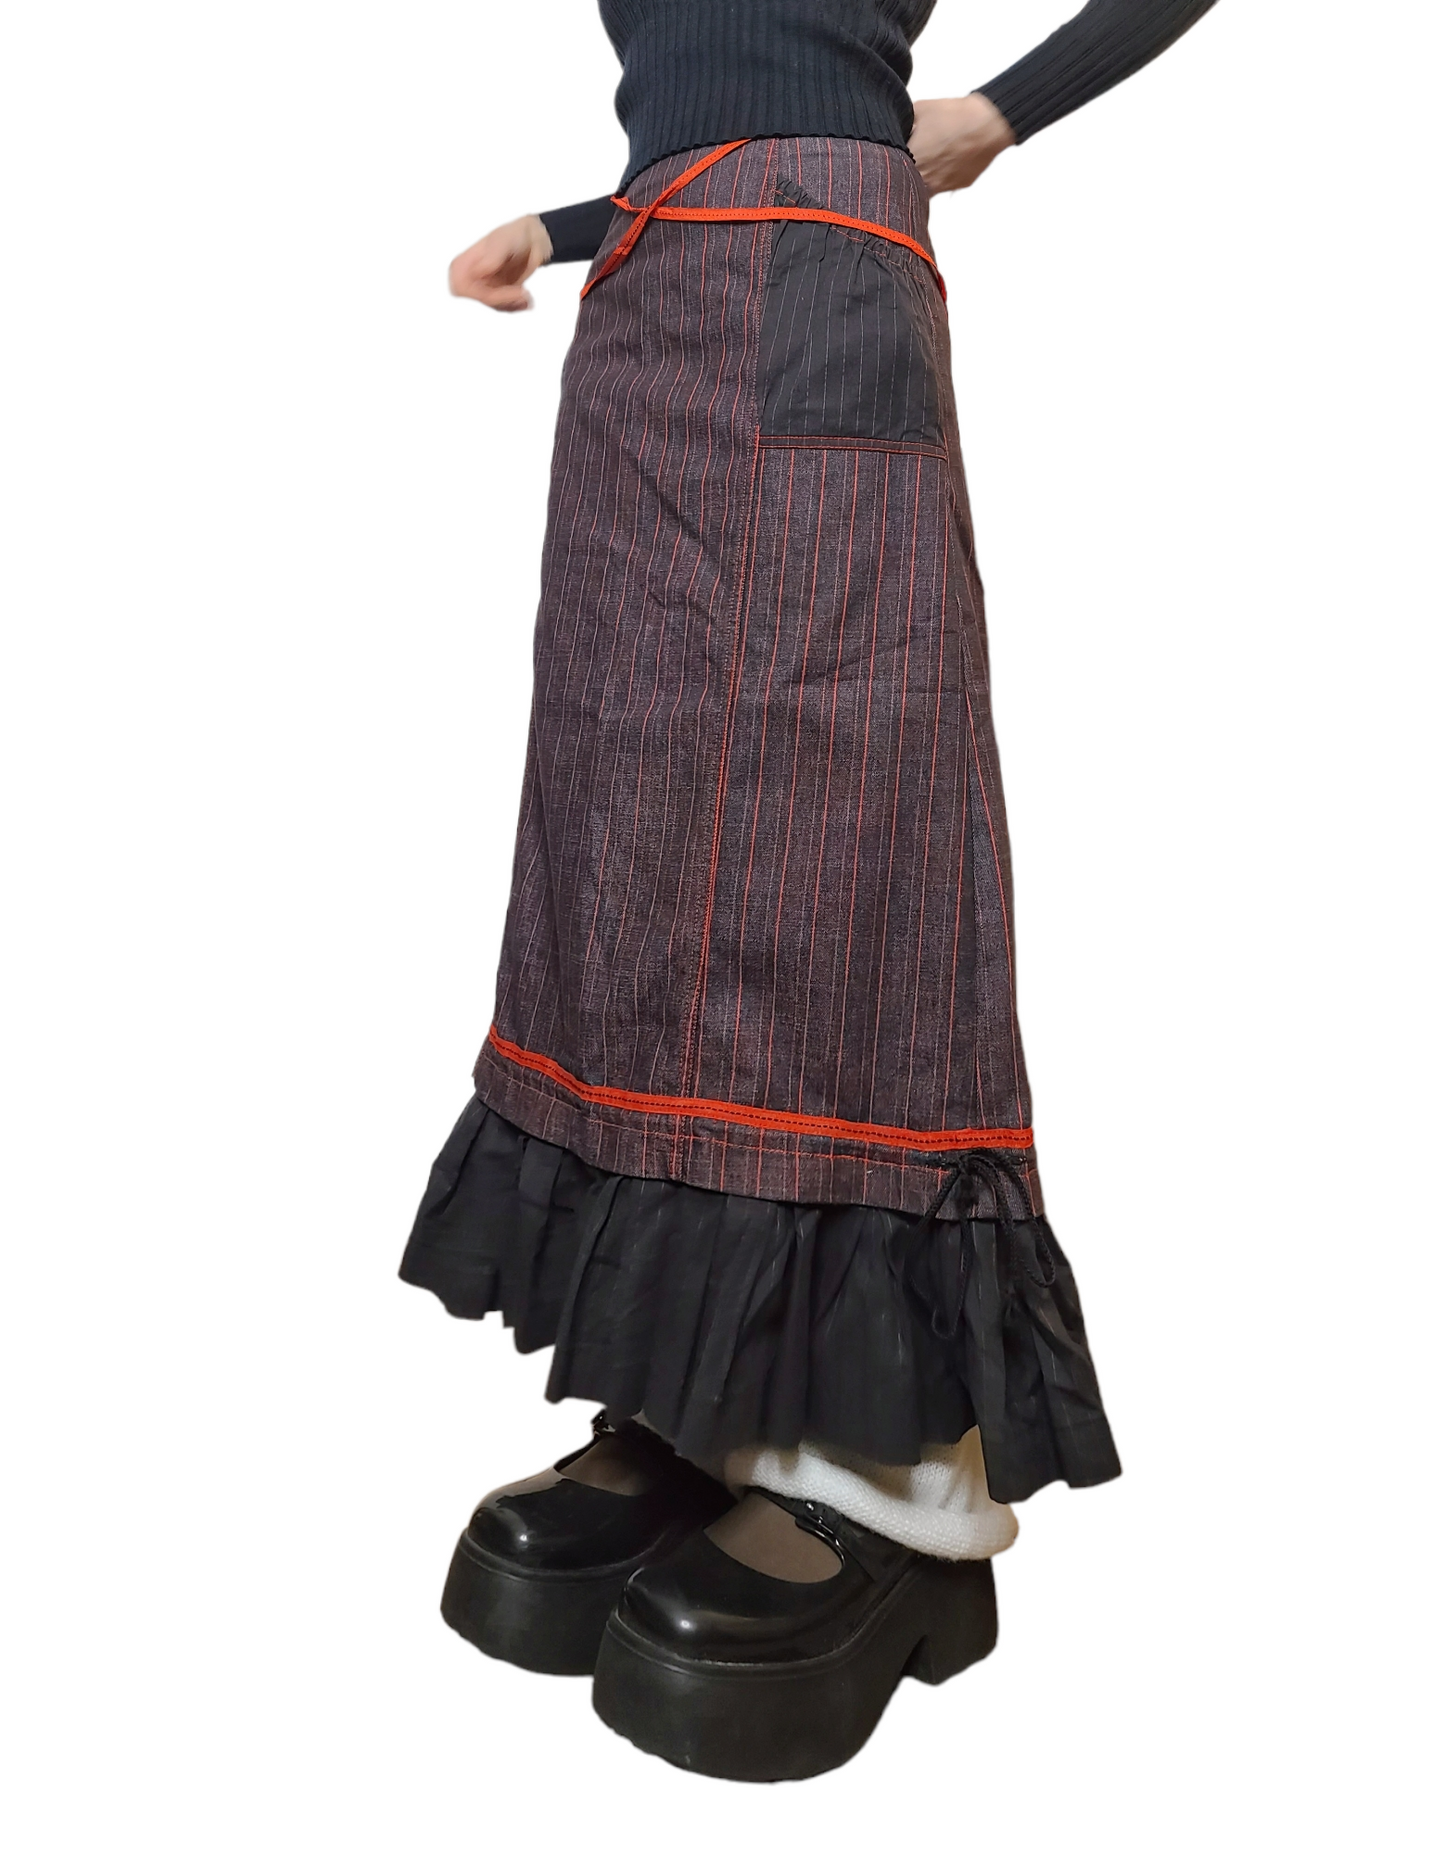 Maxi skirt gorpcore y2k fairygrunge vintage 